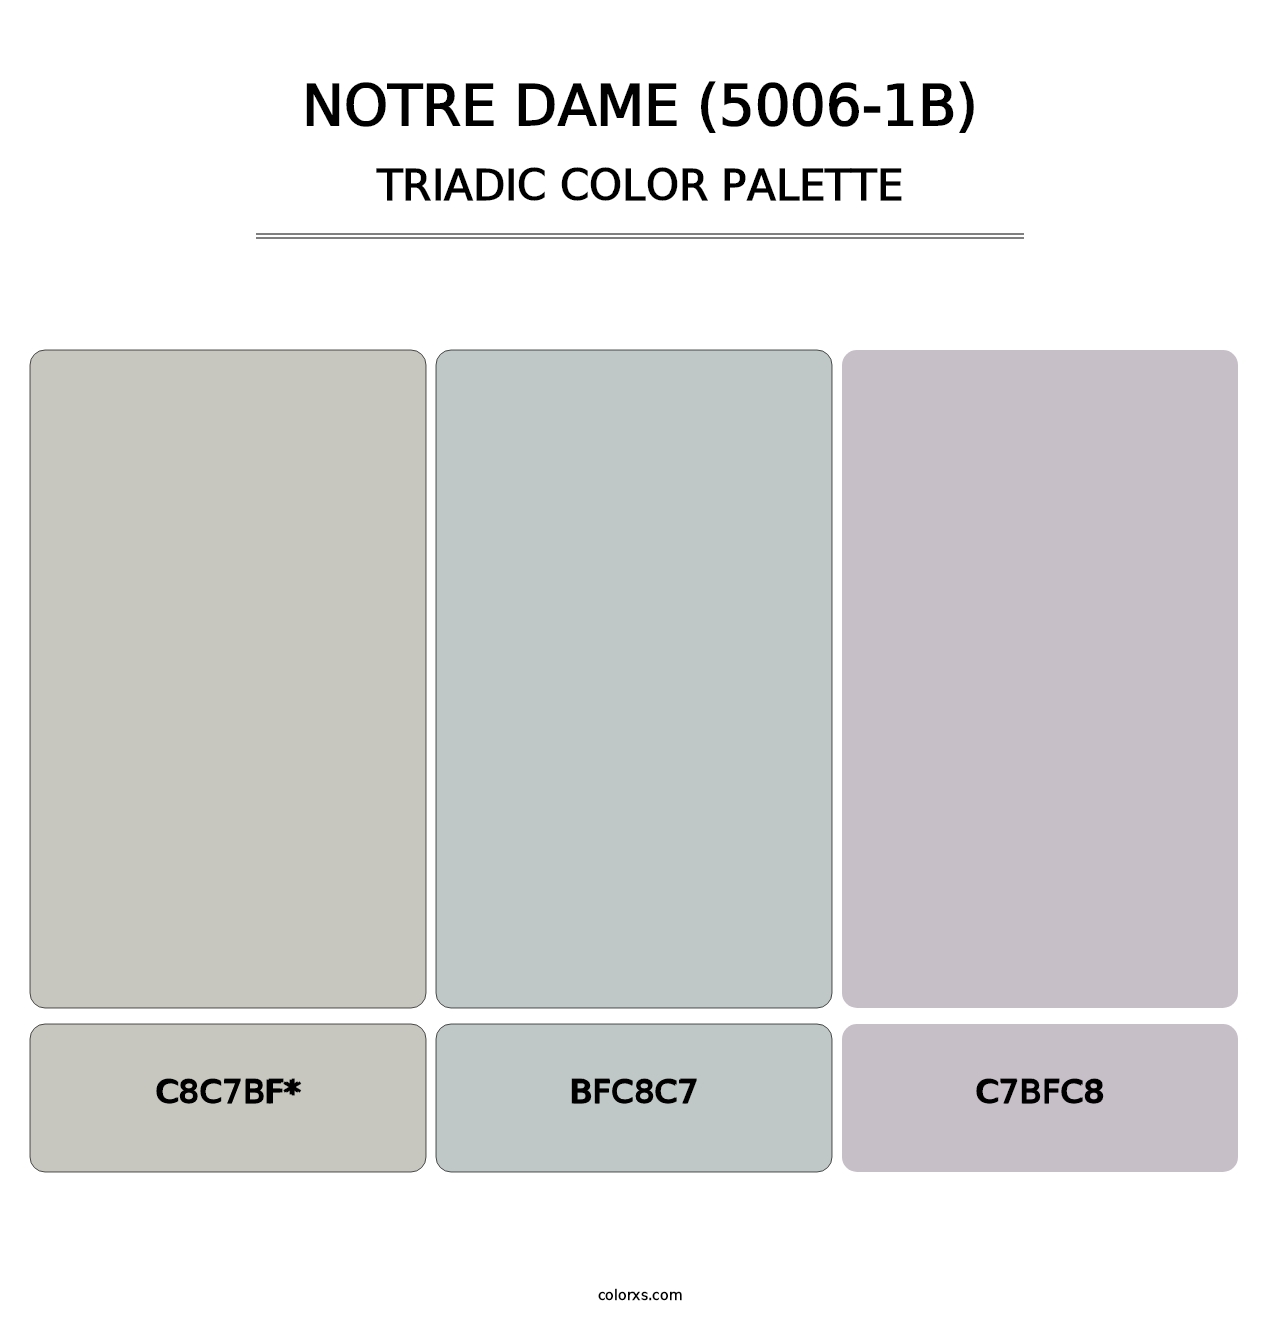 Notre Dame (5006-1B) - Triadic Color Palette